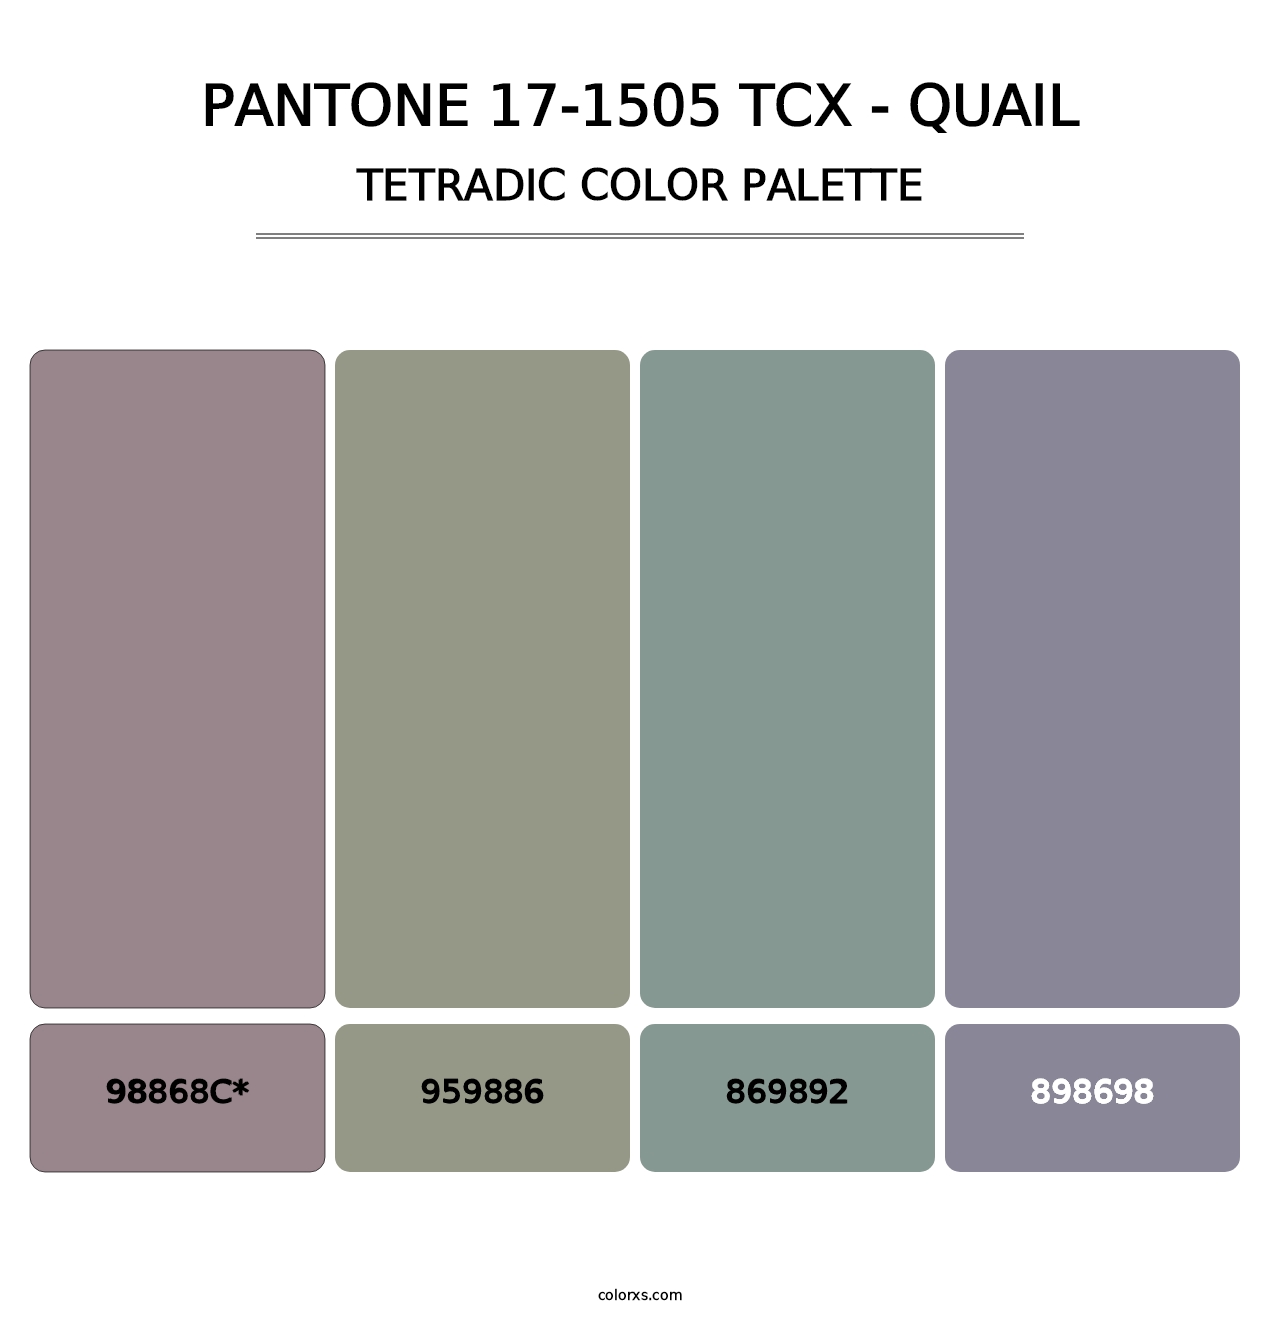 PANTONE 17-1505 TCX - Quail - Tetradic Color Palette